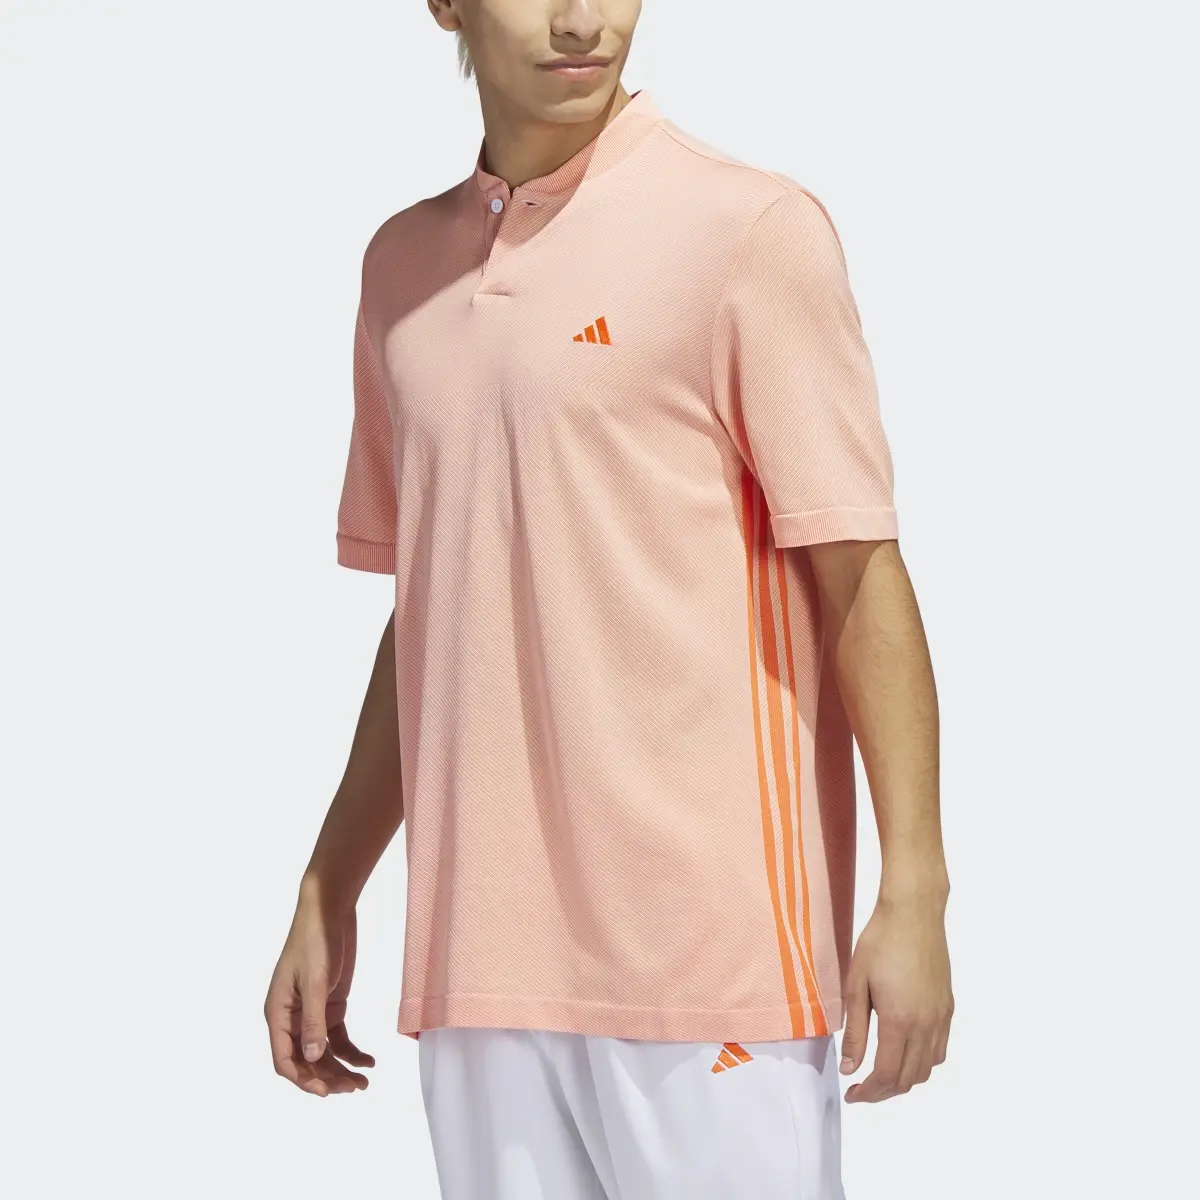 Adidas Made To Be Remade Henry Neck Seamless Golf Shirt. 1